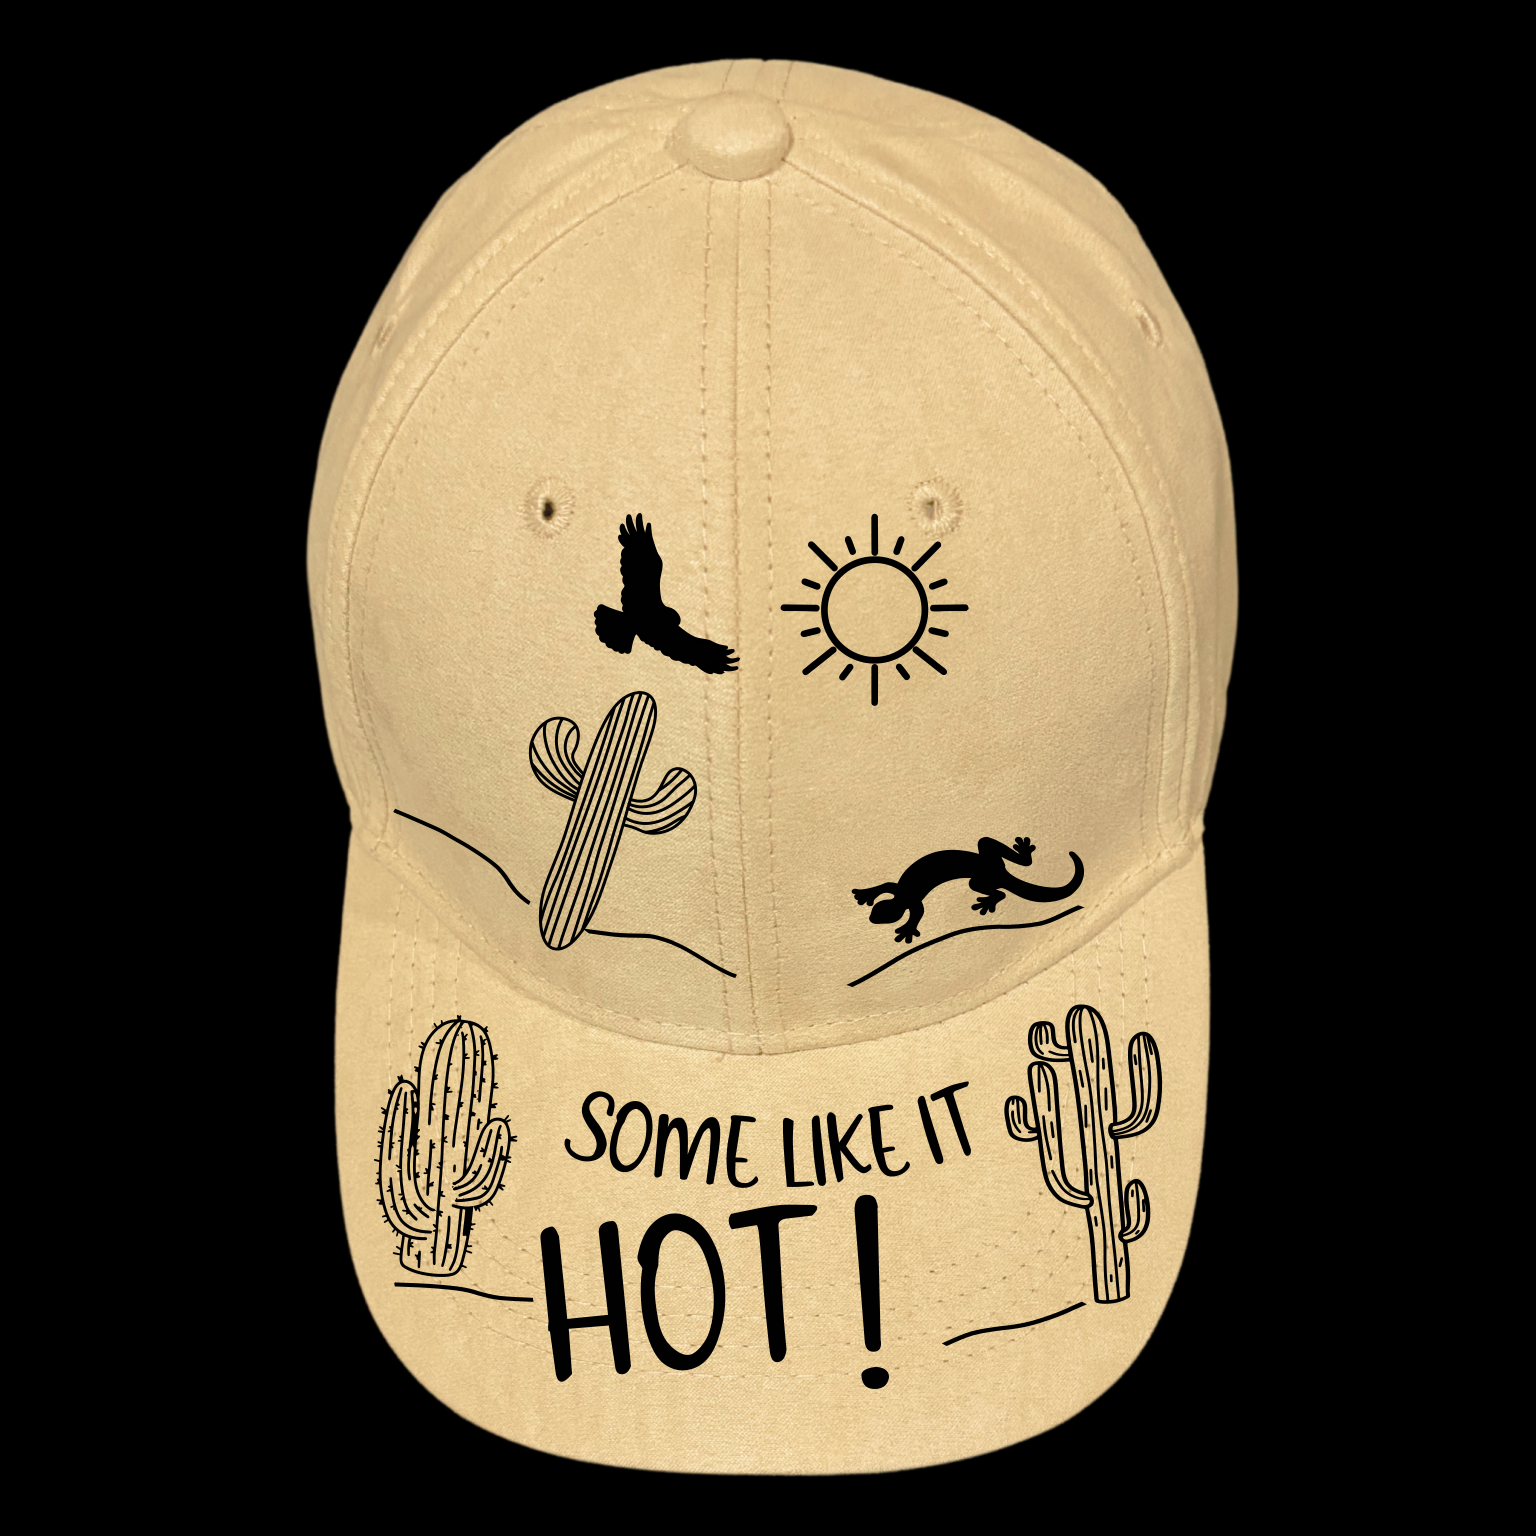 Some Like It Hot design on a baseball cap